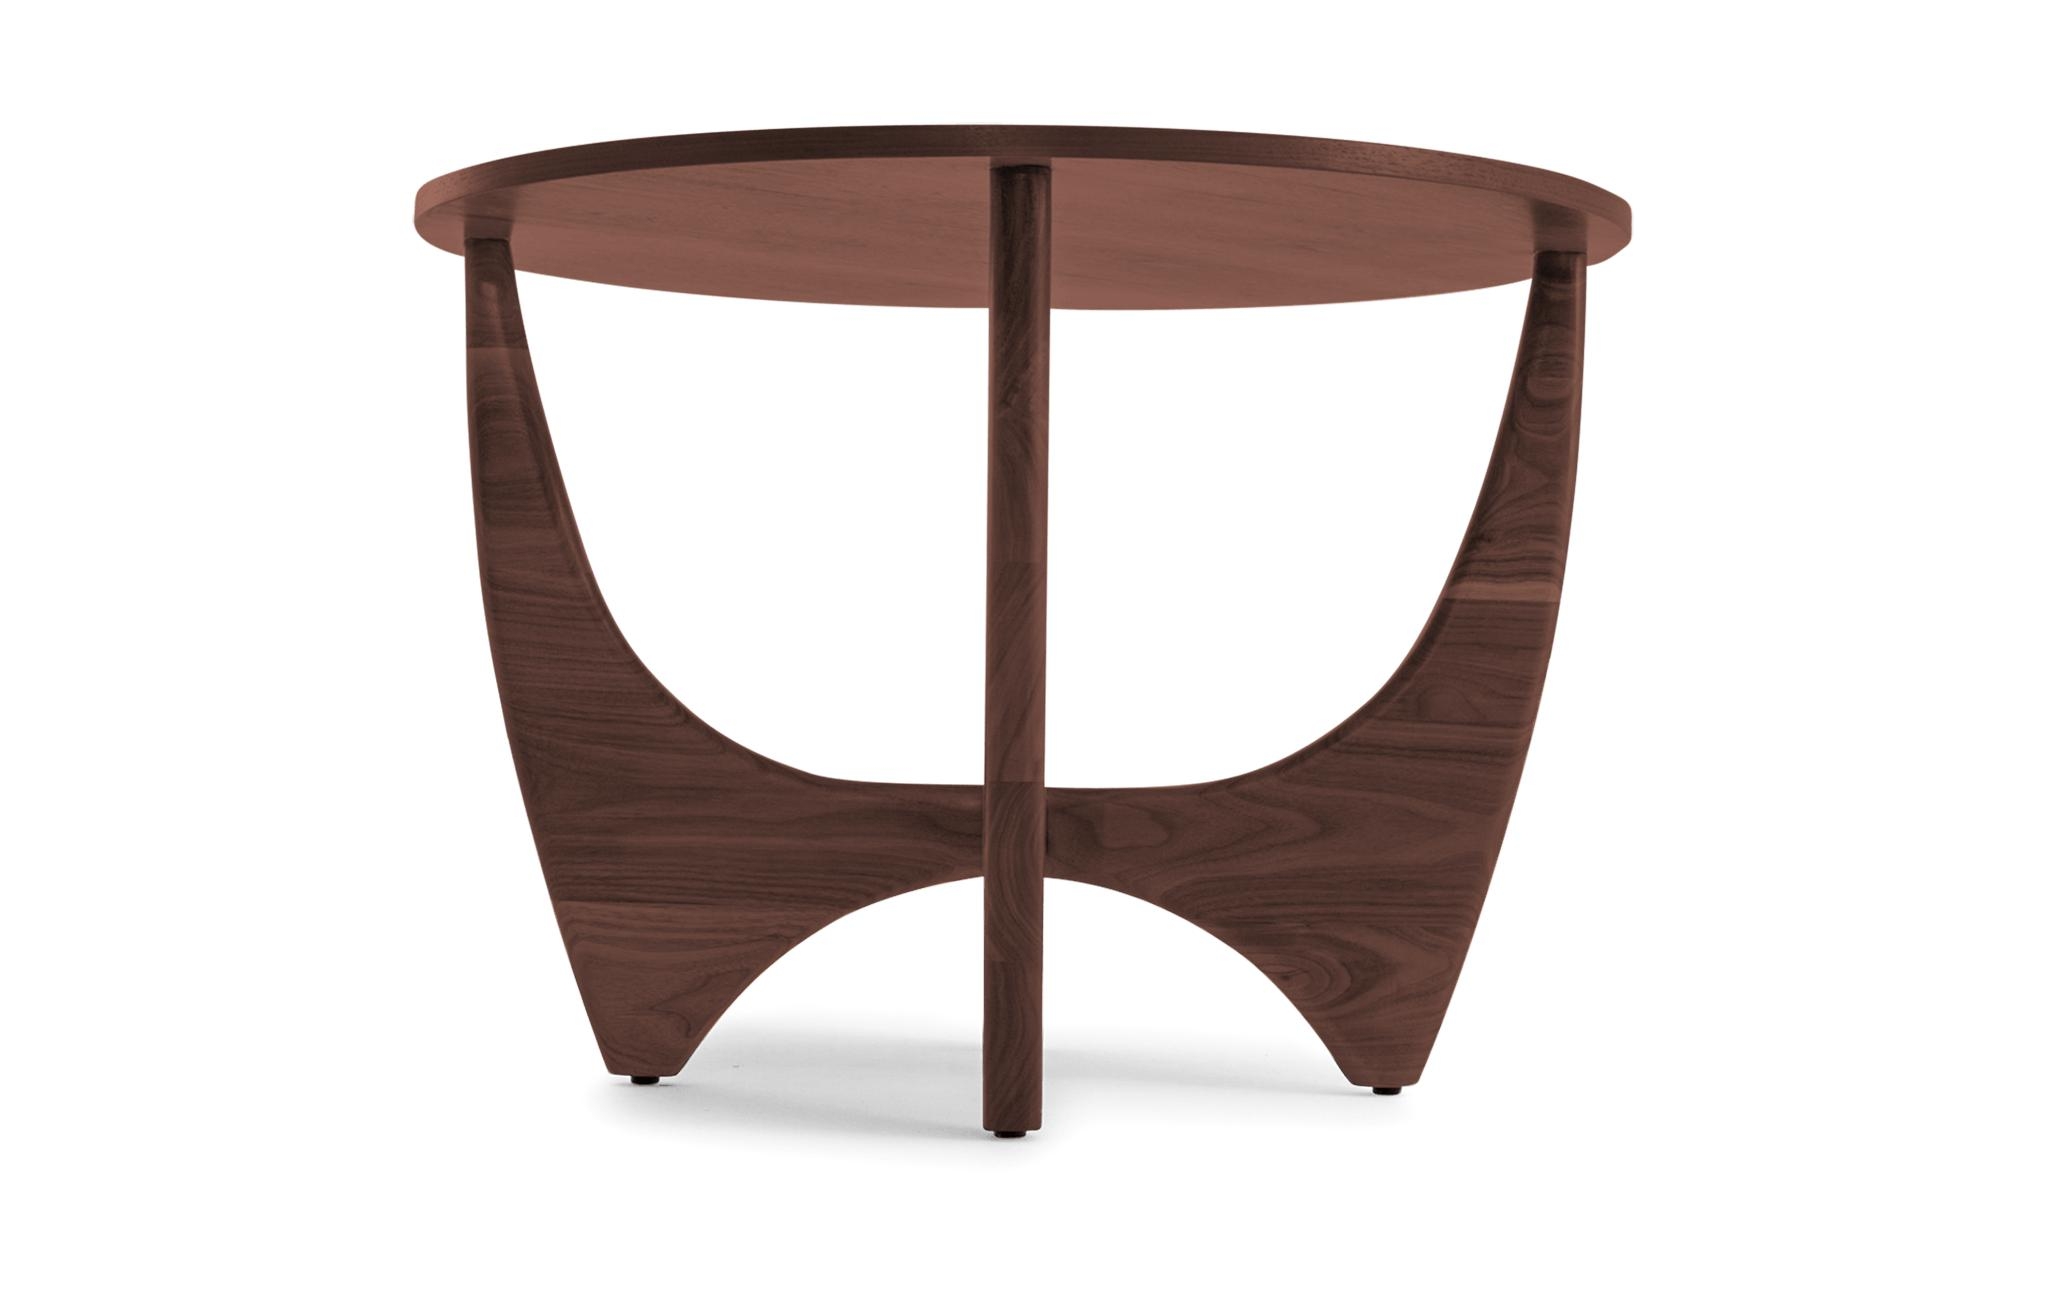 Stern Mid Century Modern (Wood Top) End Table - Walnut - Image 2